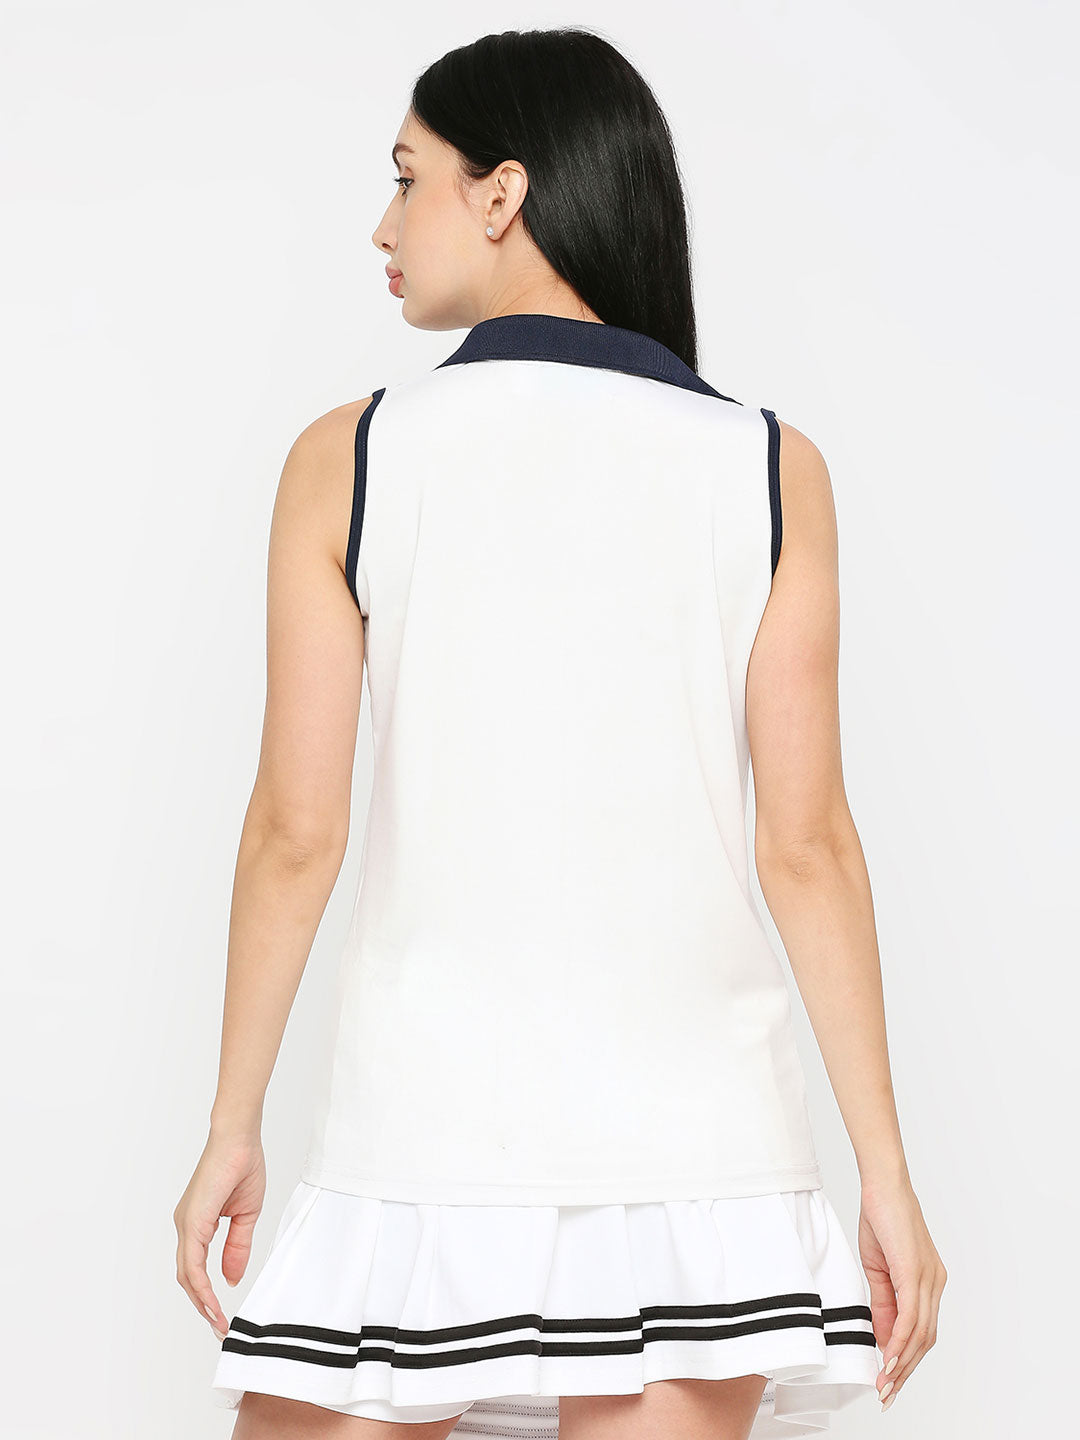 Women's Tennis Vest - White & Navy